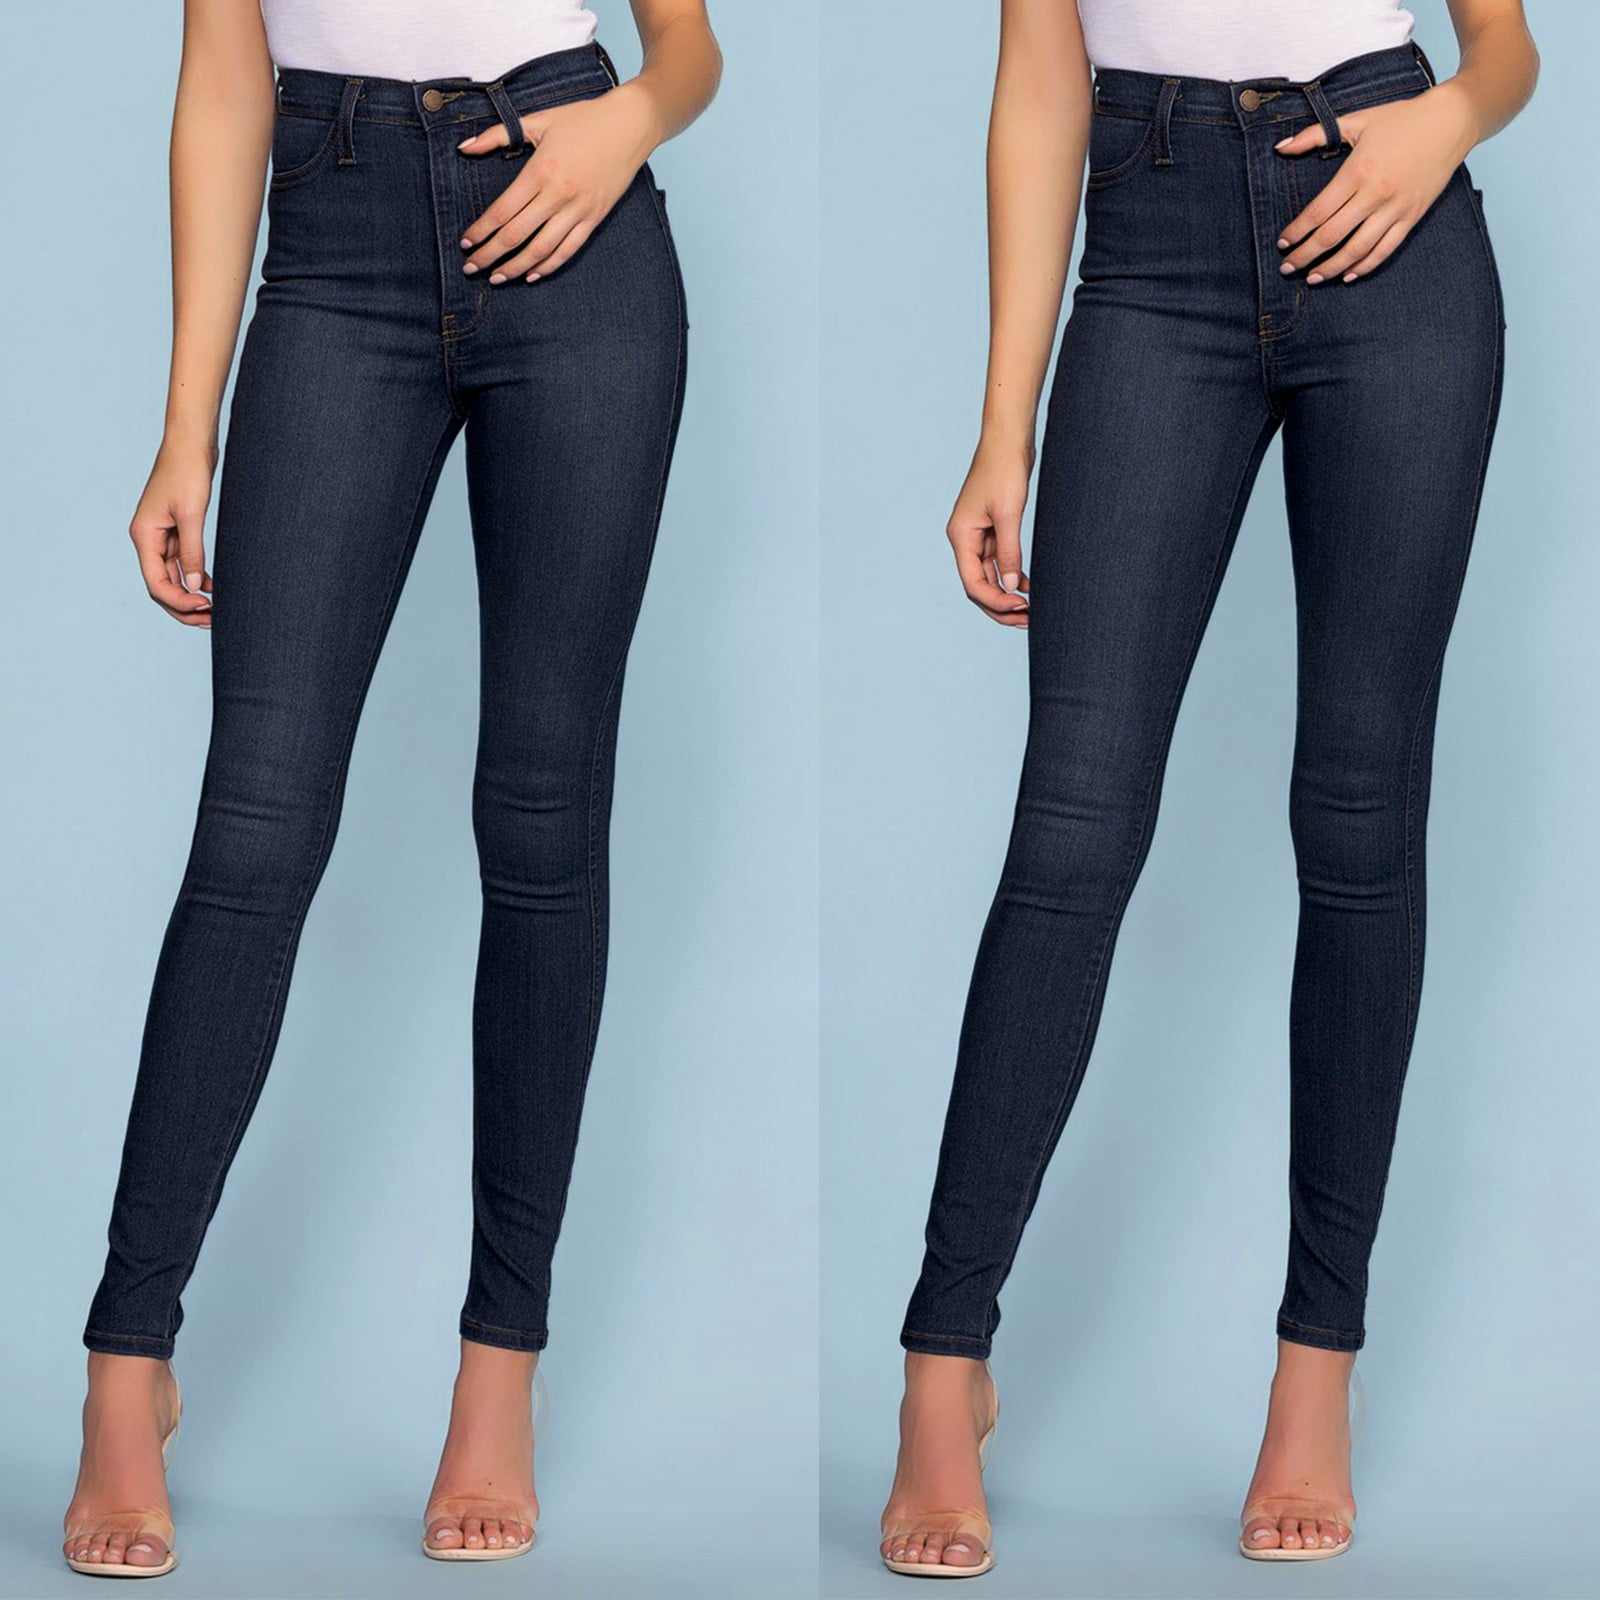 Aayomet Straight Leg Jeans For Women Women's Totally Shaping Skinny Jeans,Dark  Blue XXL - Walmart.com